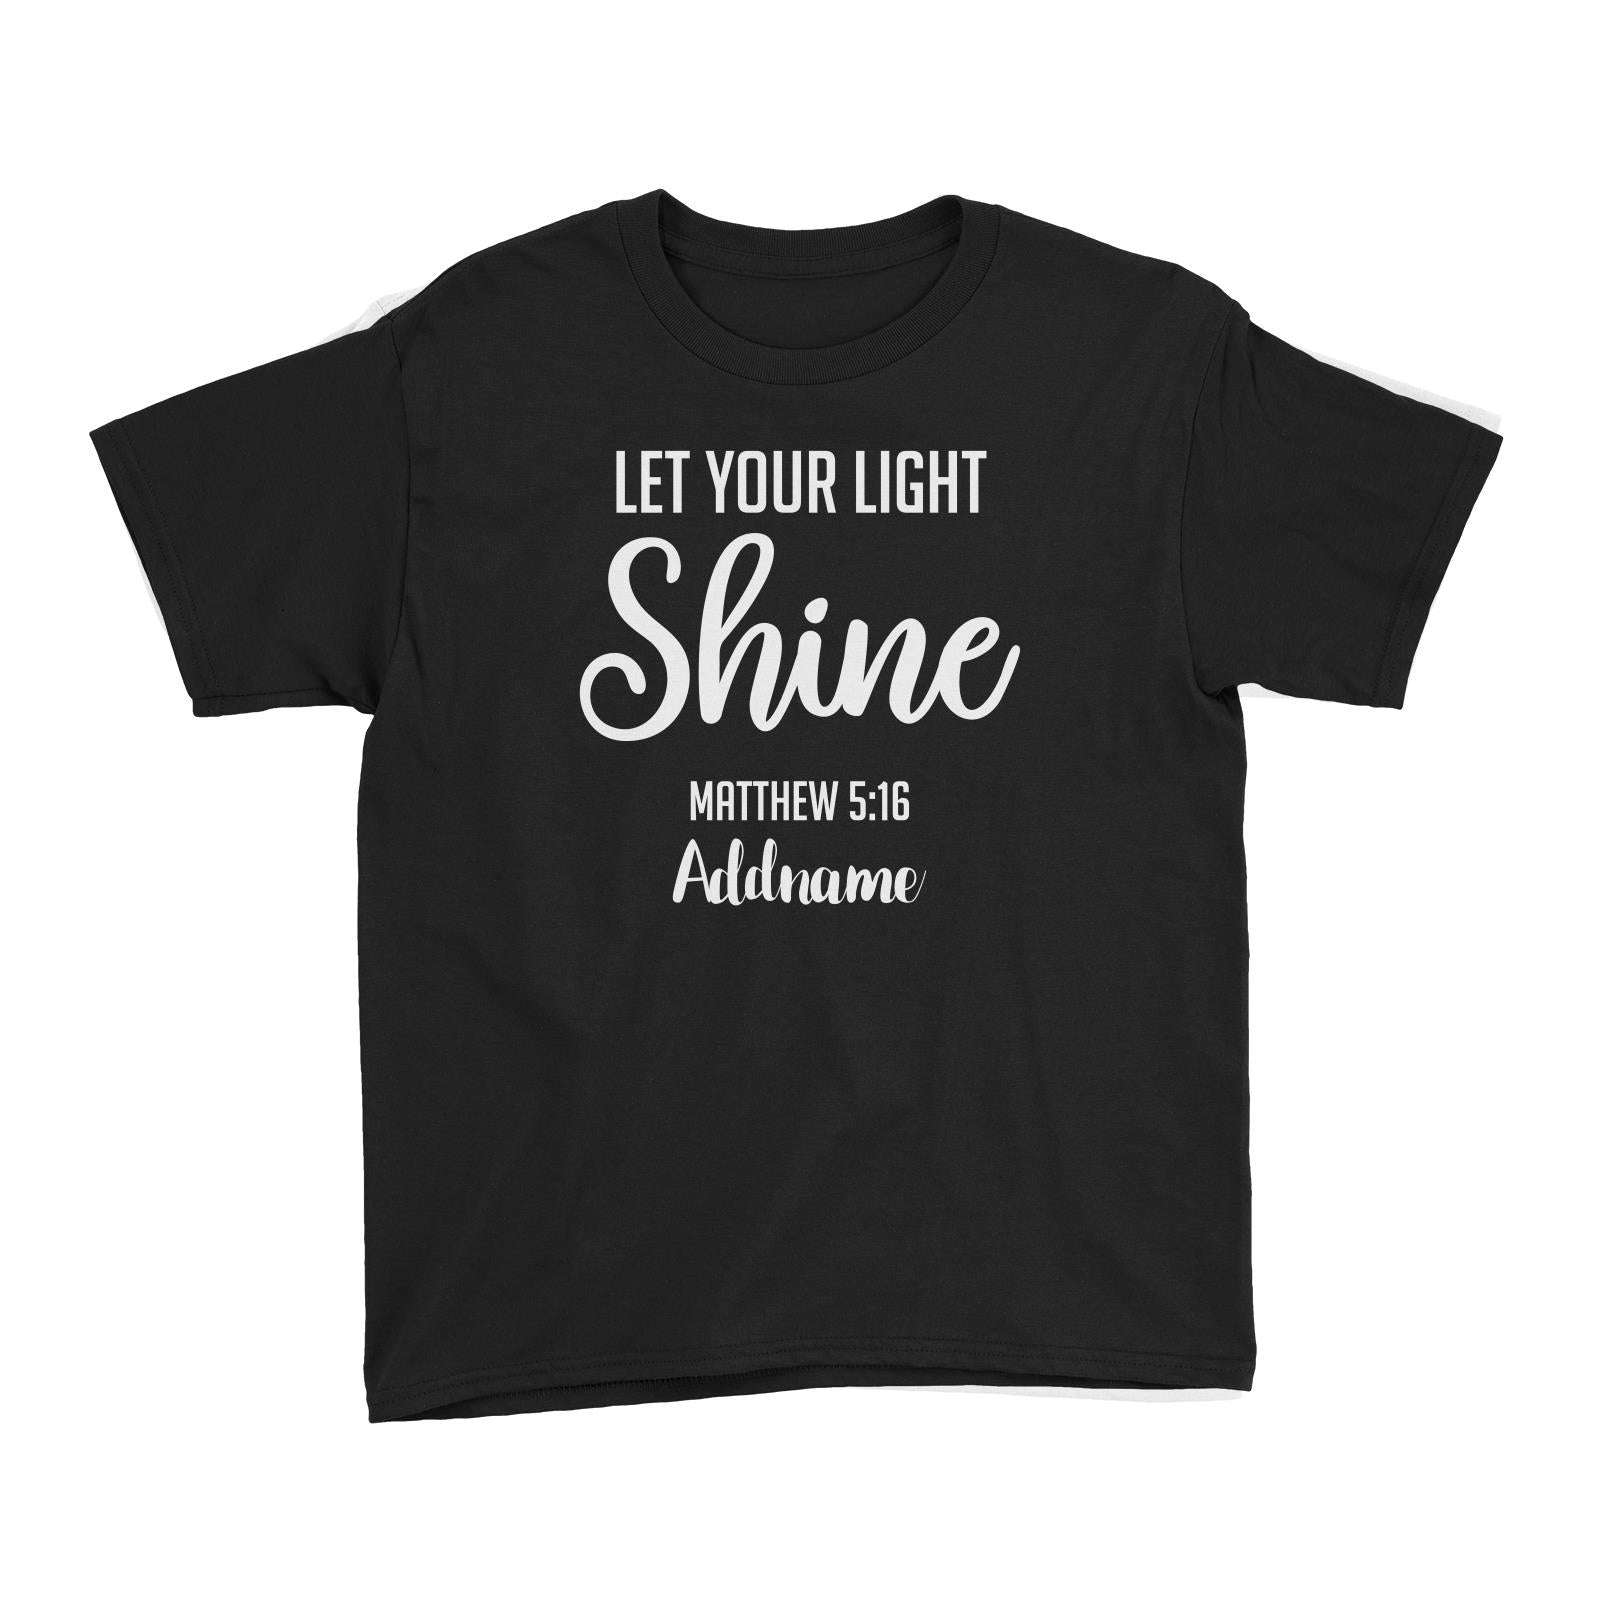 Christian Series Let Your Light Shine Matthew 5.16 Addname Kid's T-Shirt